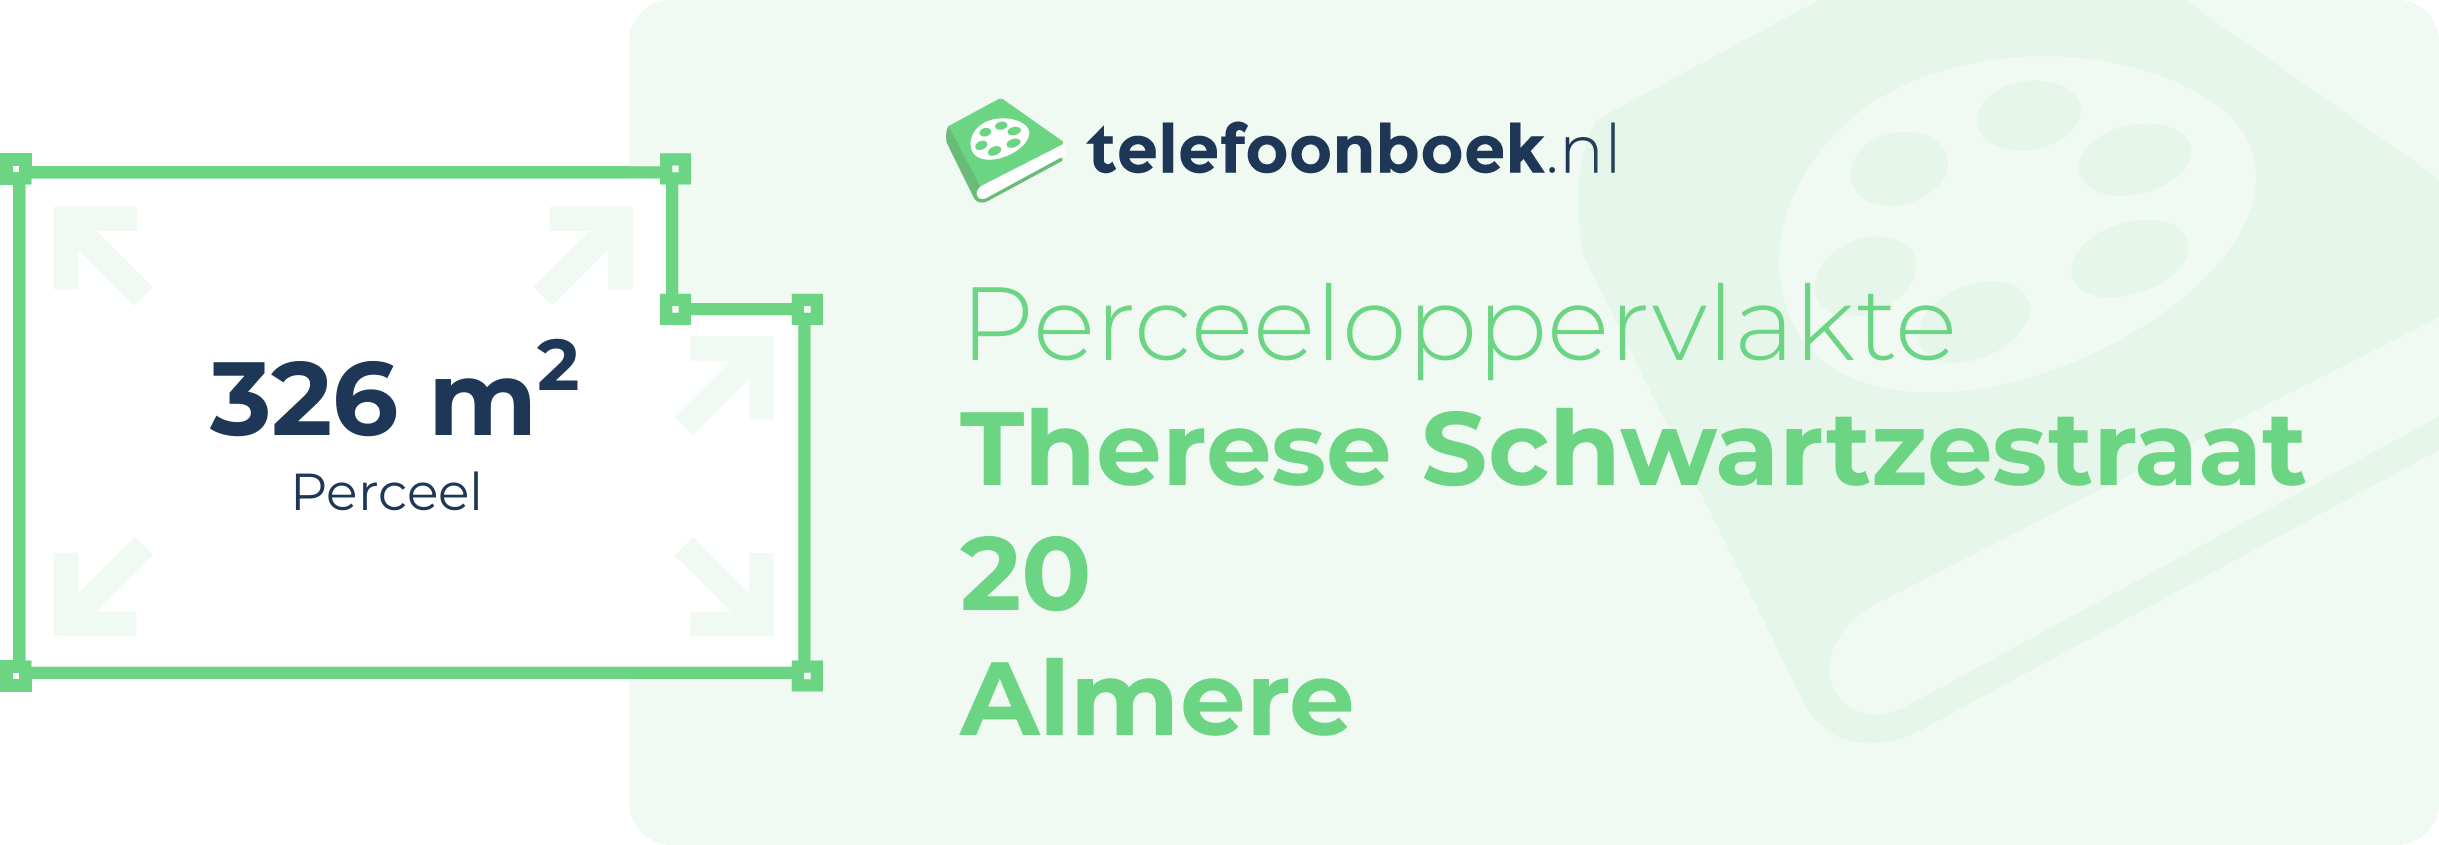 Perceeloppervlakte Therese Schwartzestraat 20 Almere